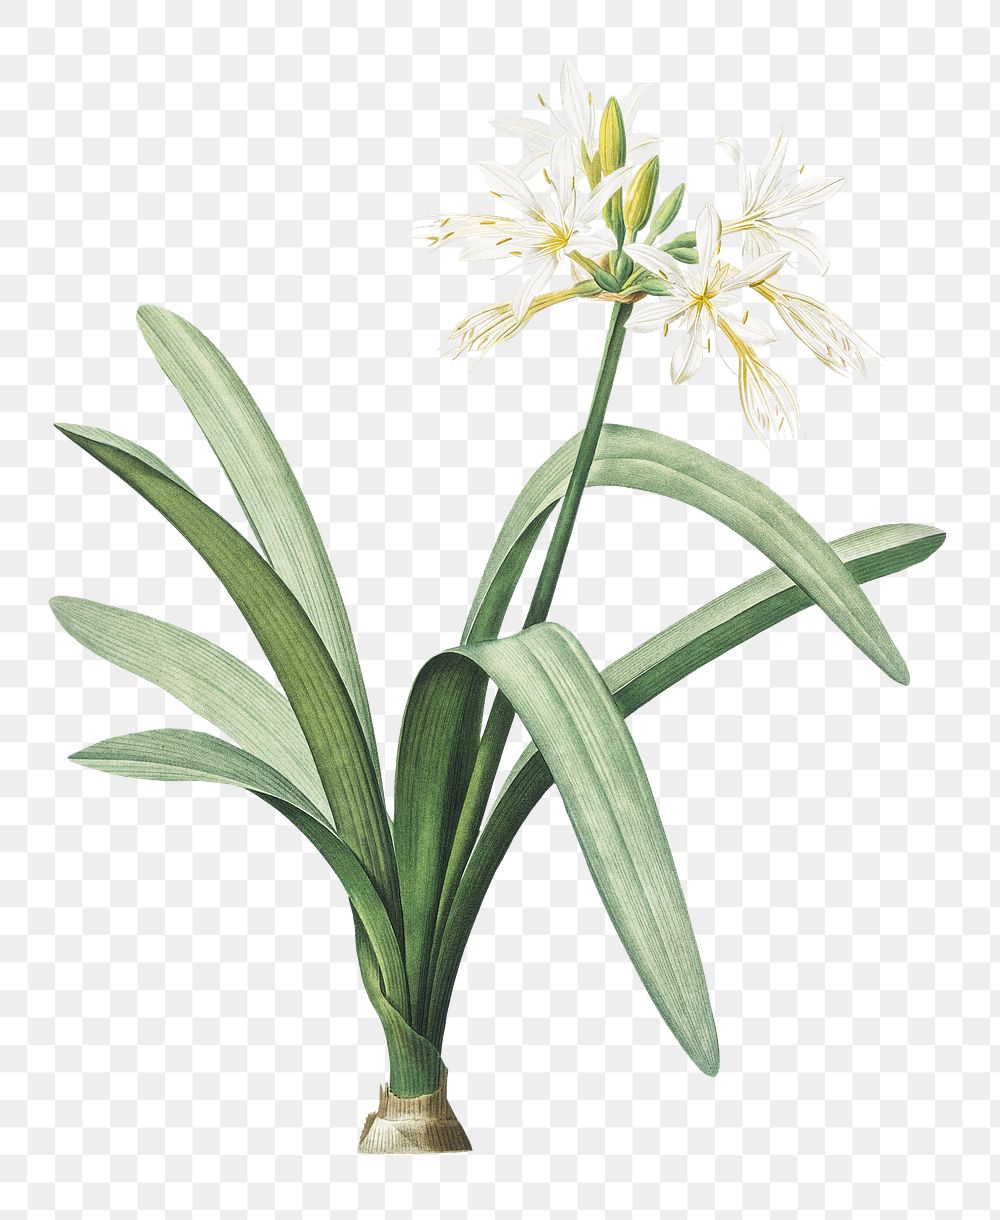 Pancratium illyricum png sticker, vintage botanical illustration, transparent background